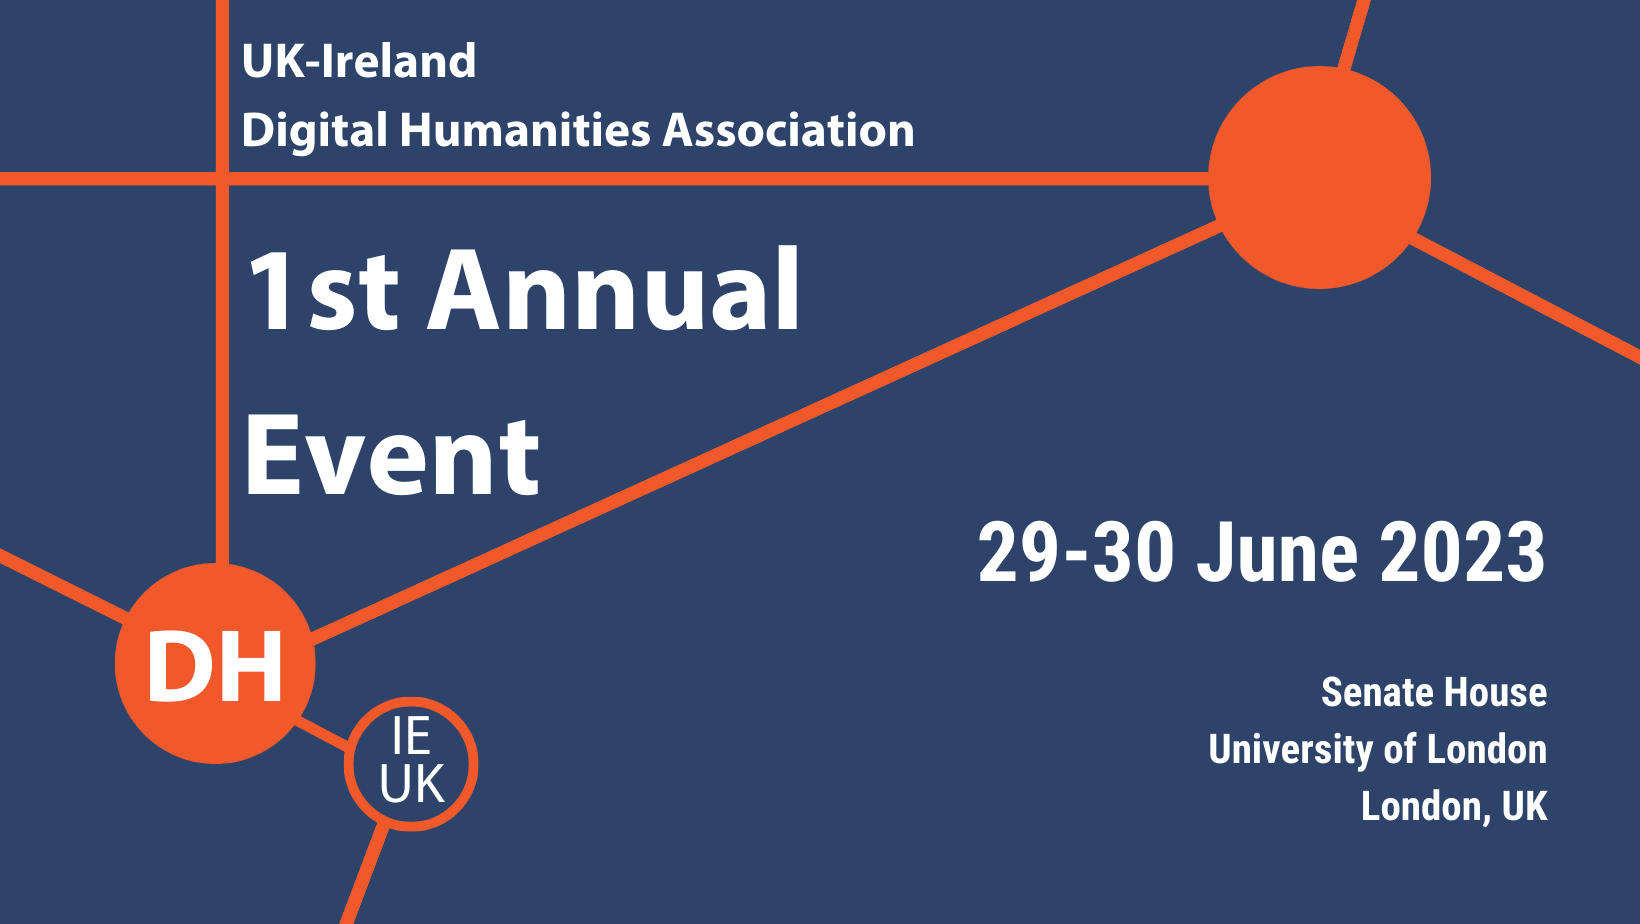 Project Postdoc Sharon Howard to present at UK-Ireland Digital Humanities Association Event